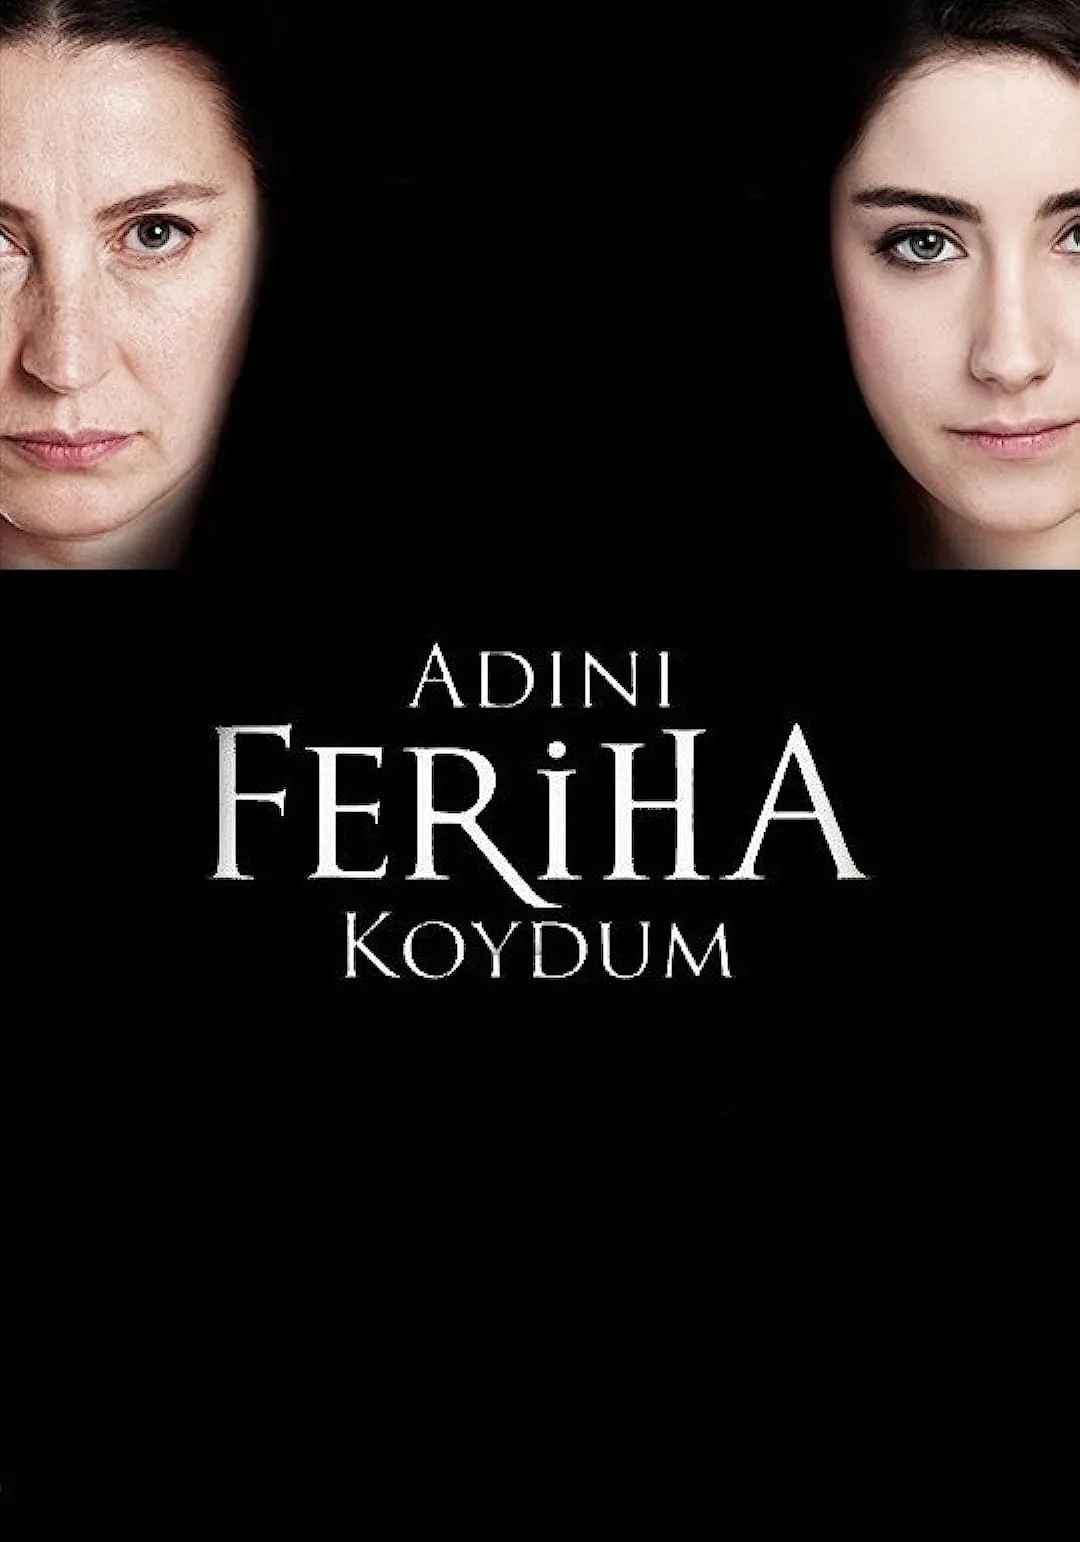 Adini Feriha Koydum | Feriha online subtitrat in romana